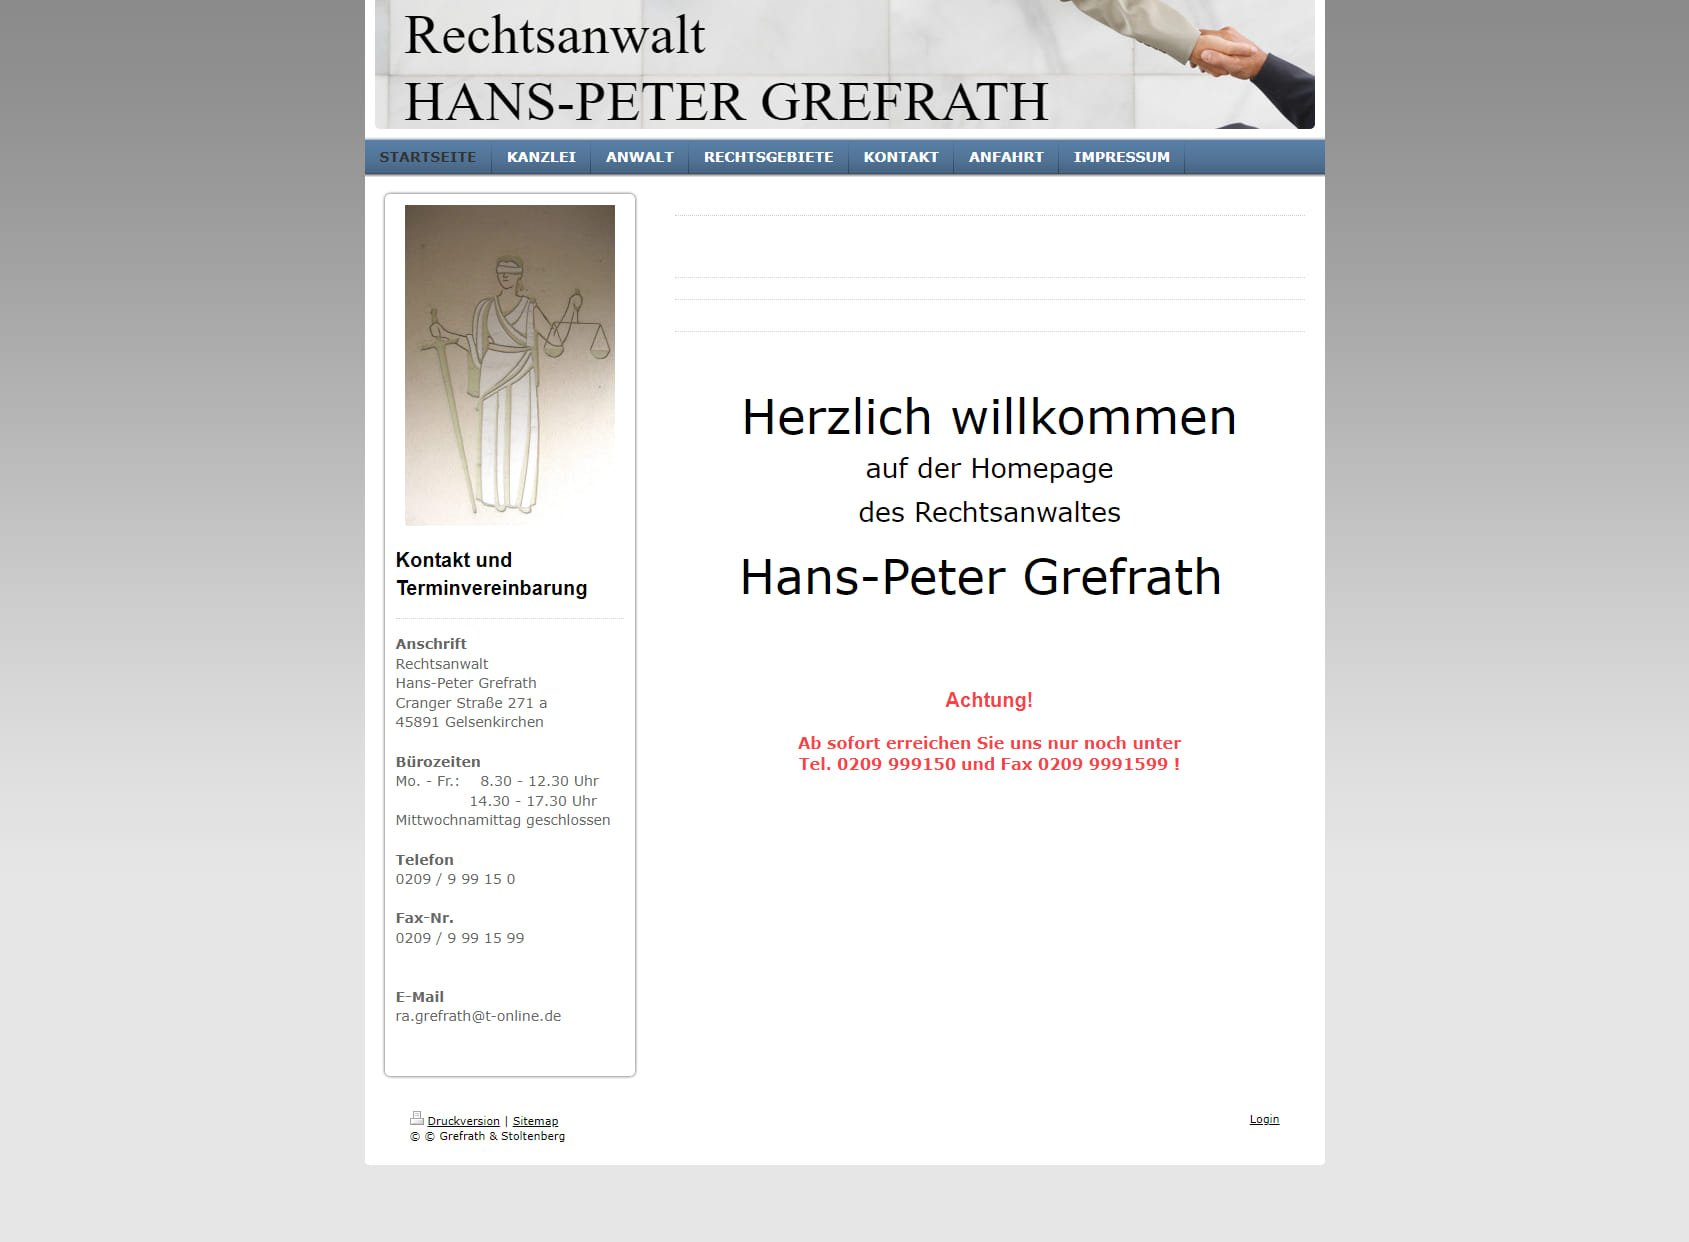 Hans-Peter Grefrath